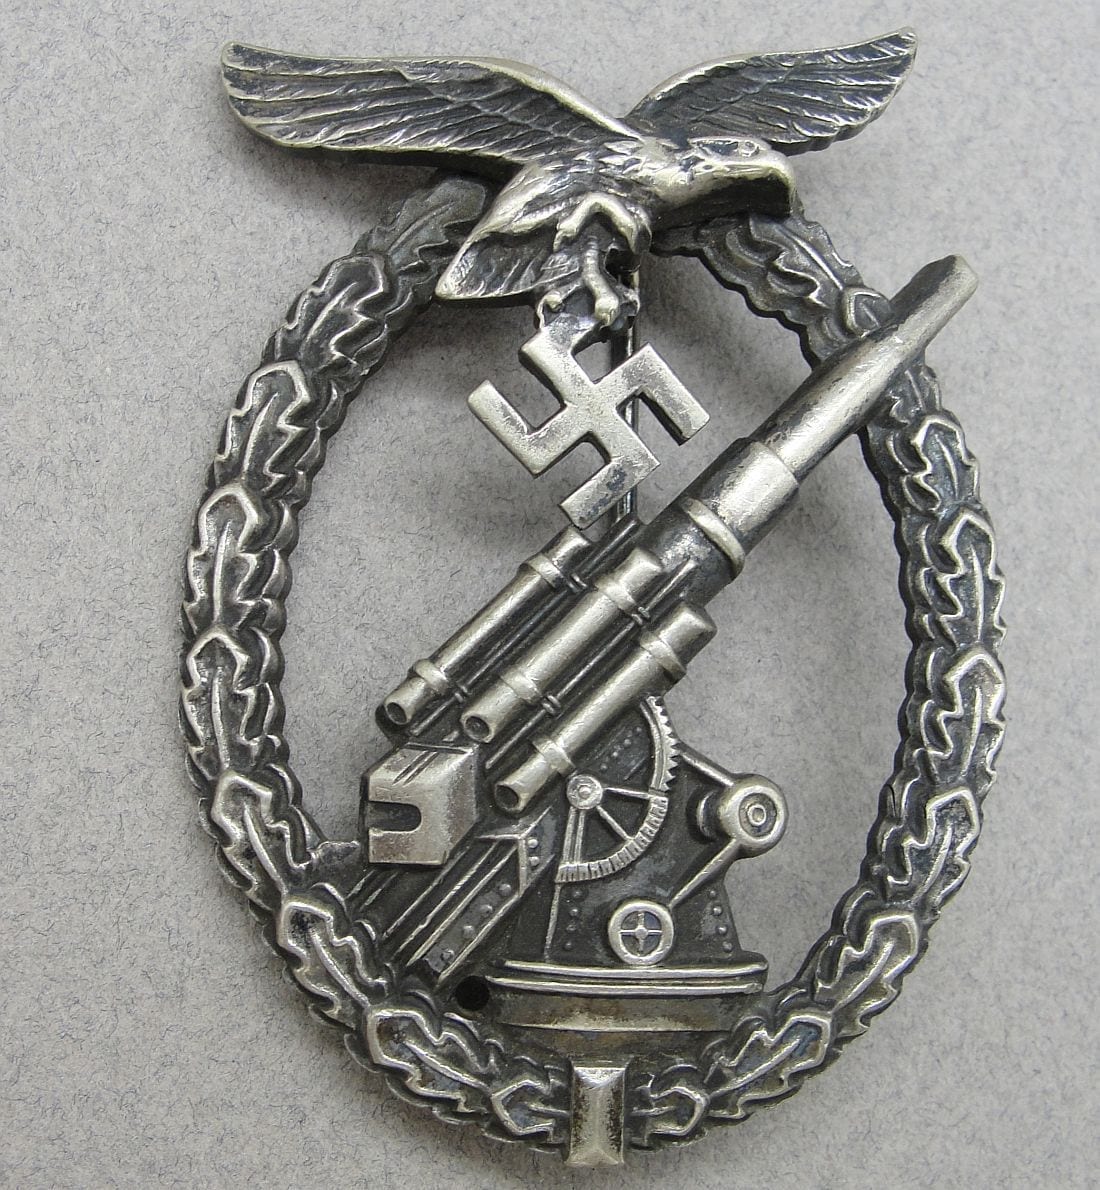 Luftwaffe Flak Badge by Brehmer